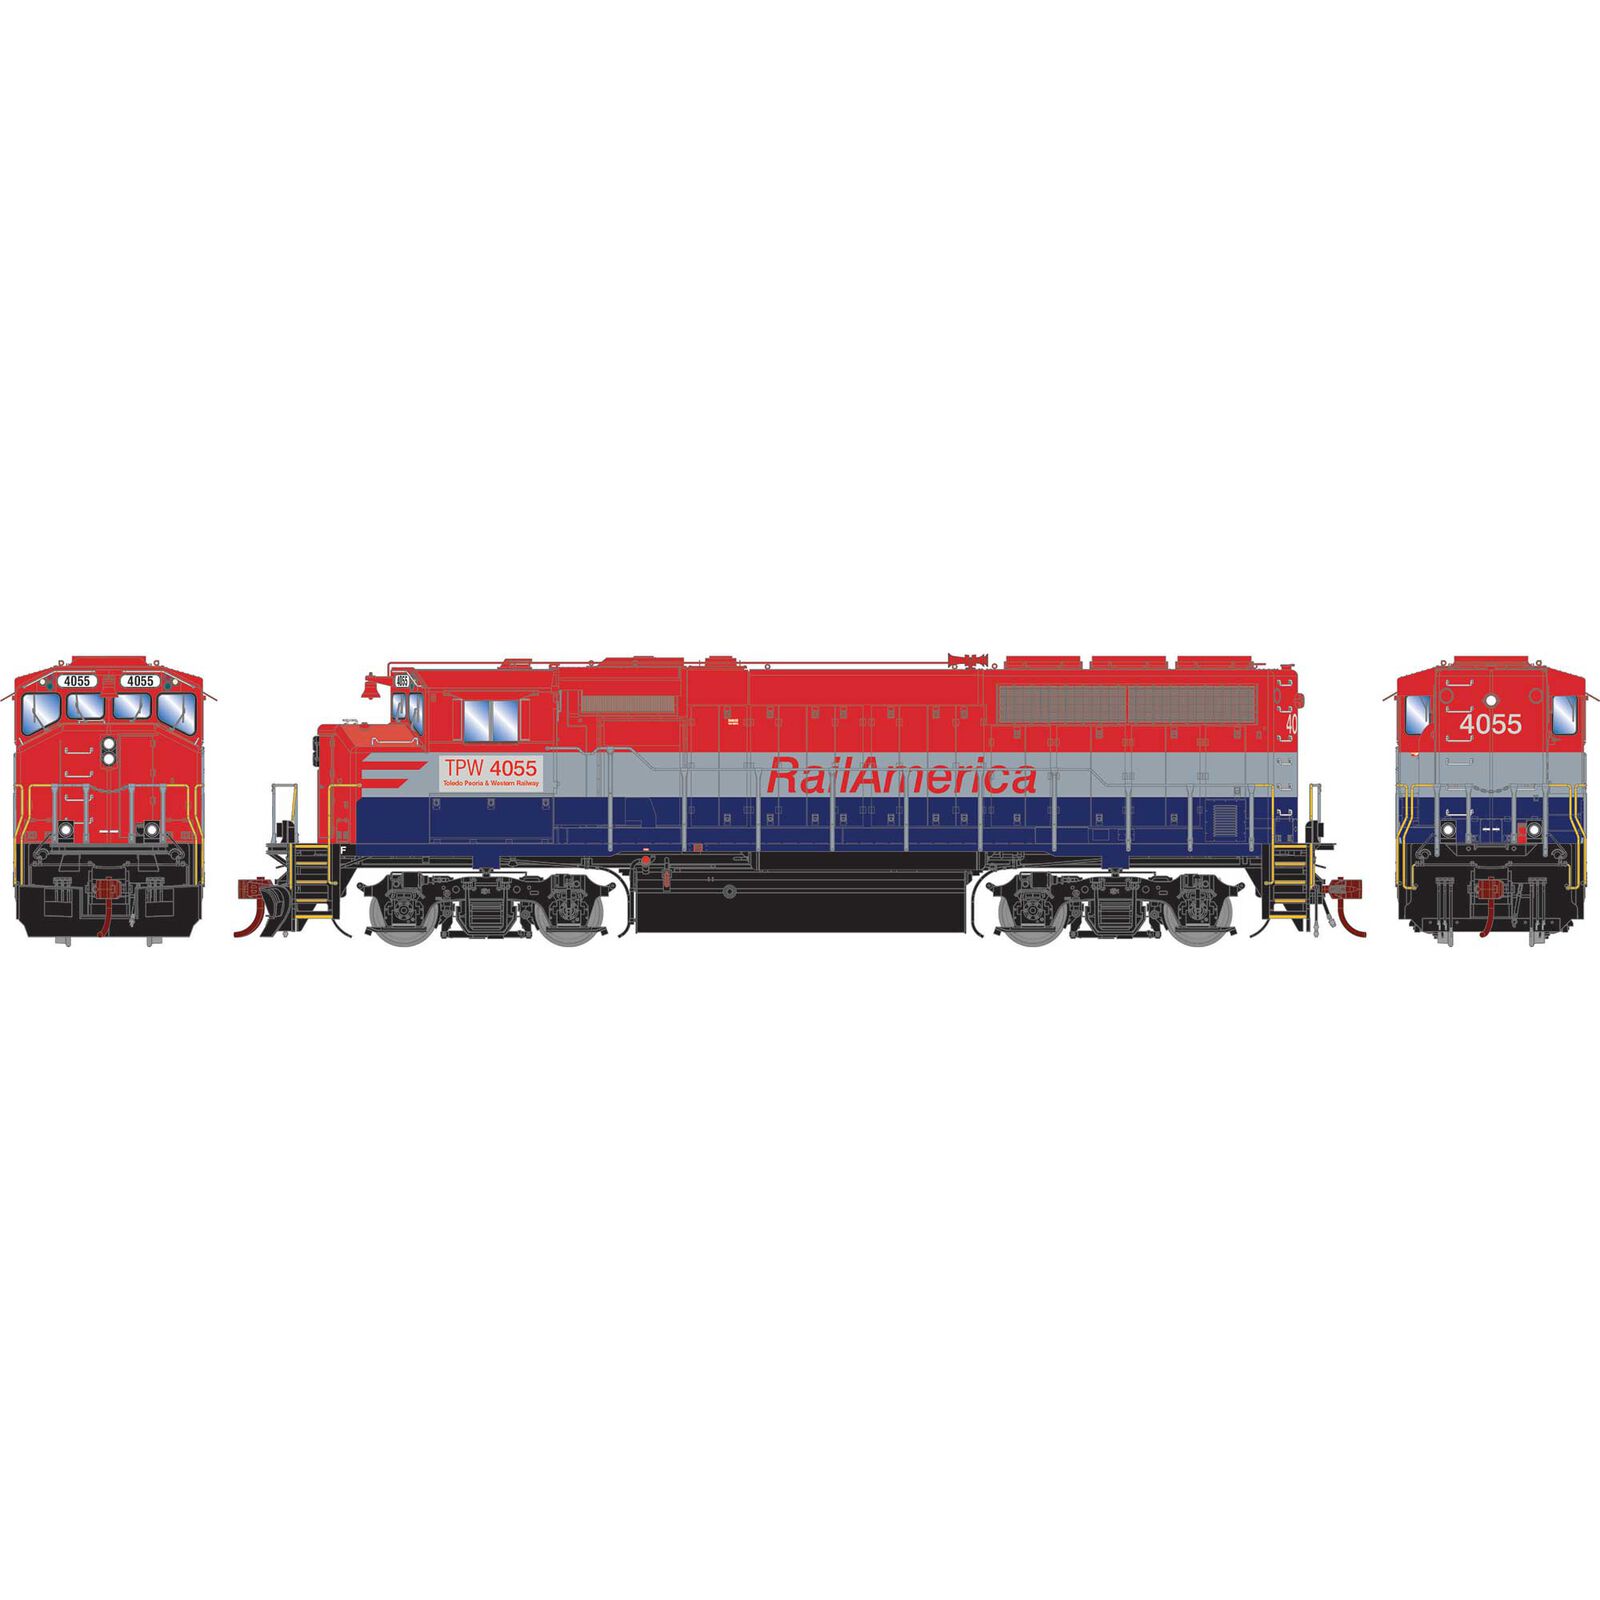 HO GP40-2L, Rail America/TP&W #4055